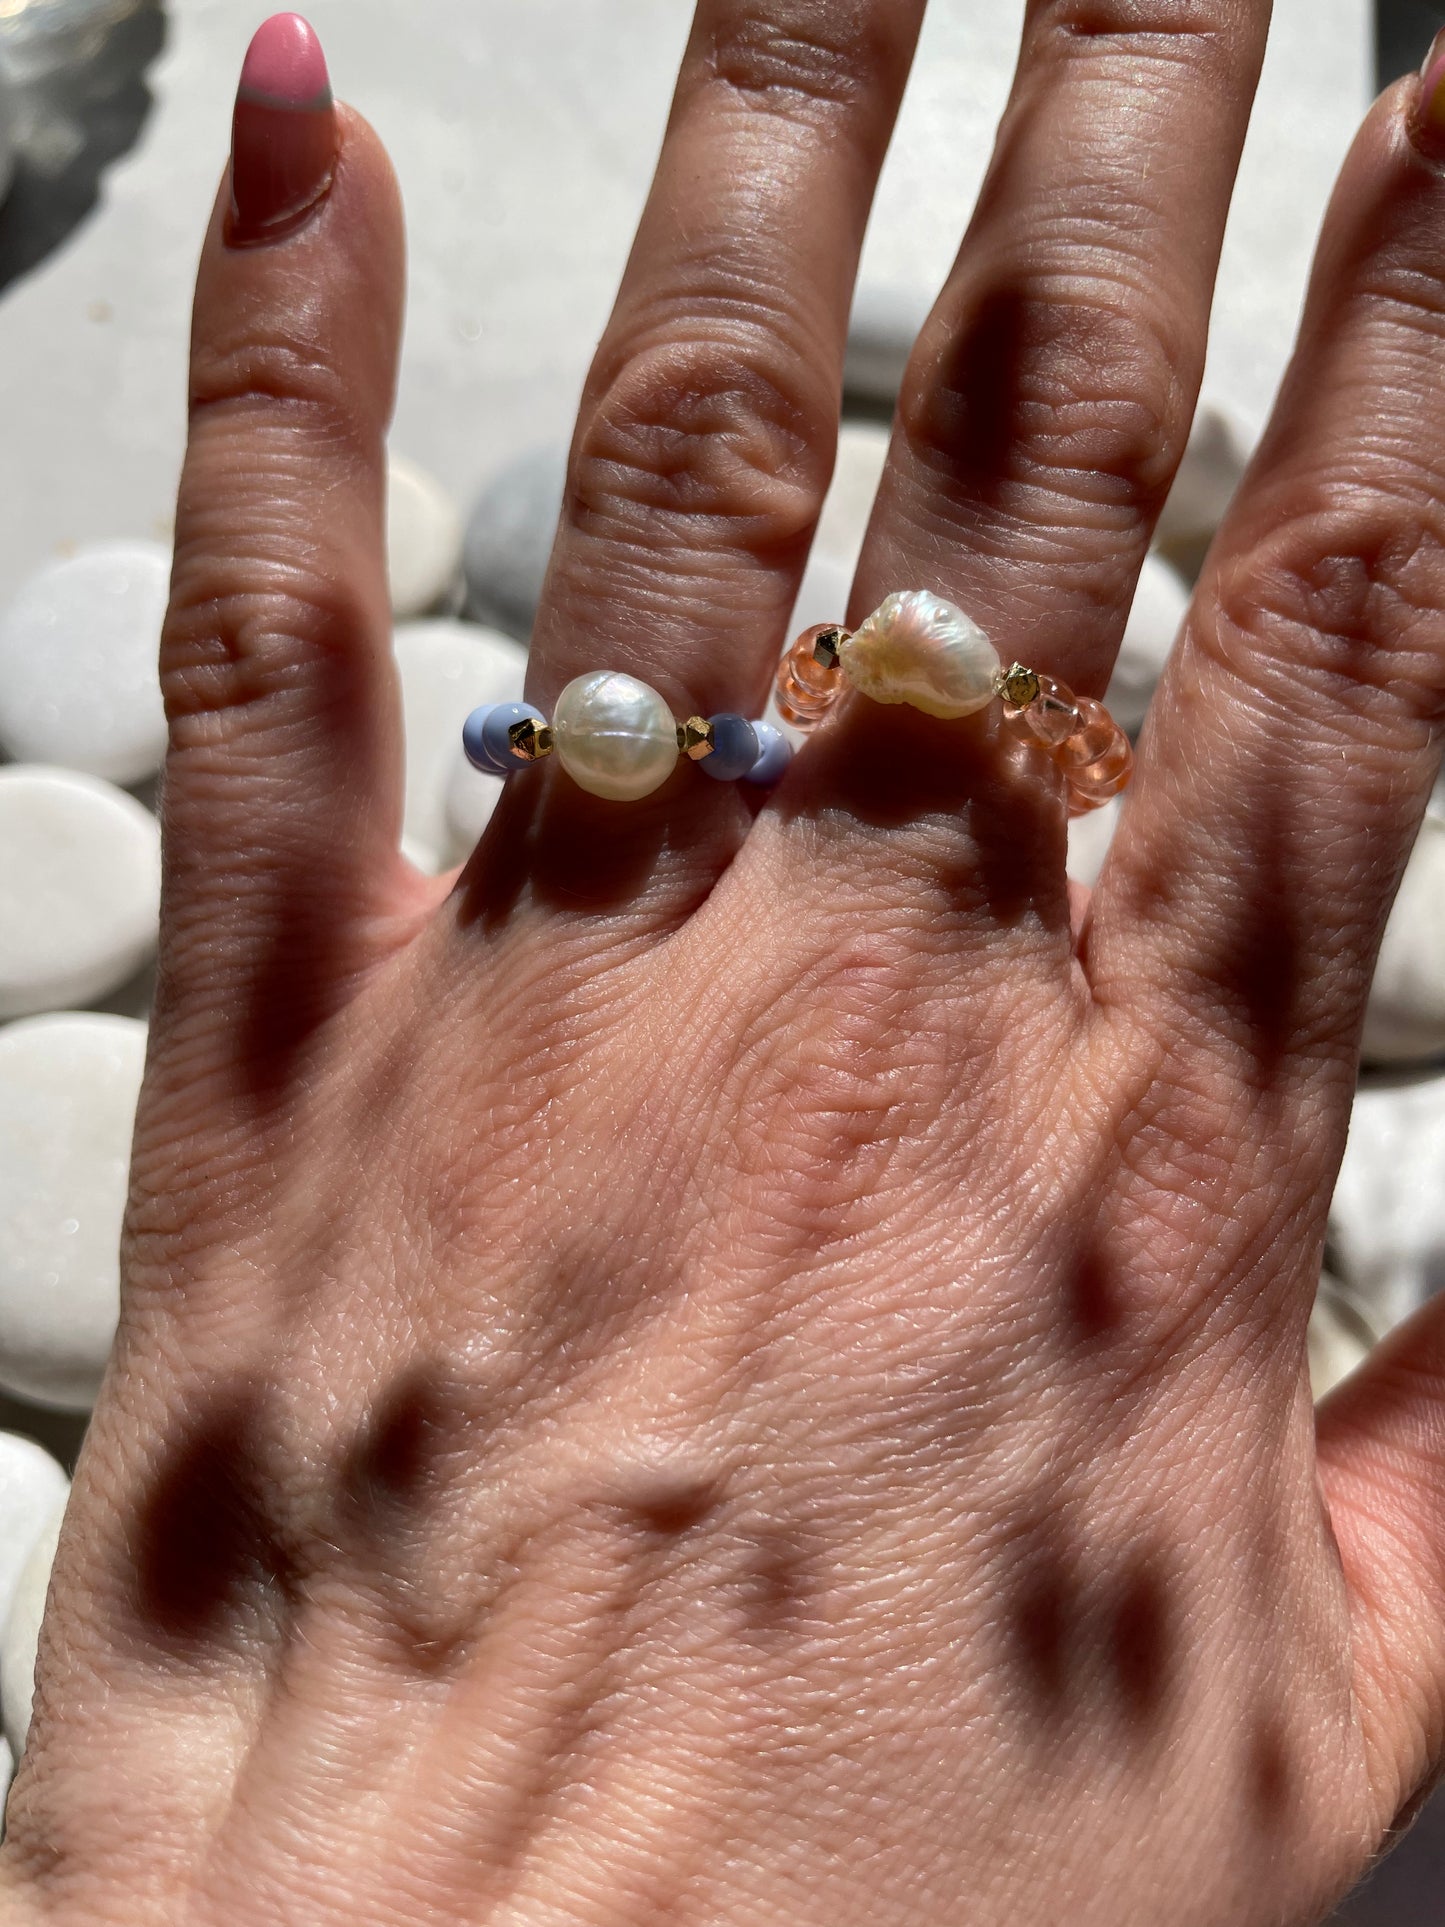 Freshwater pearl ring